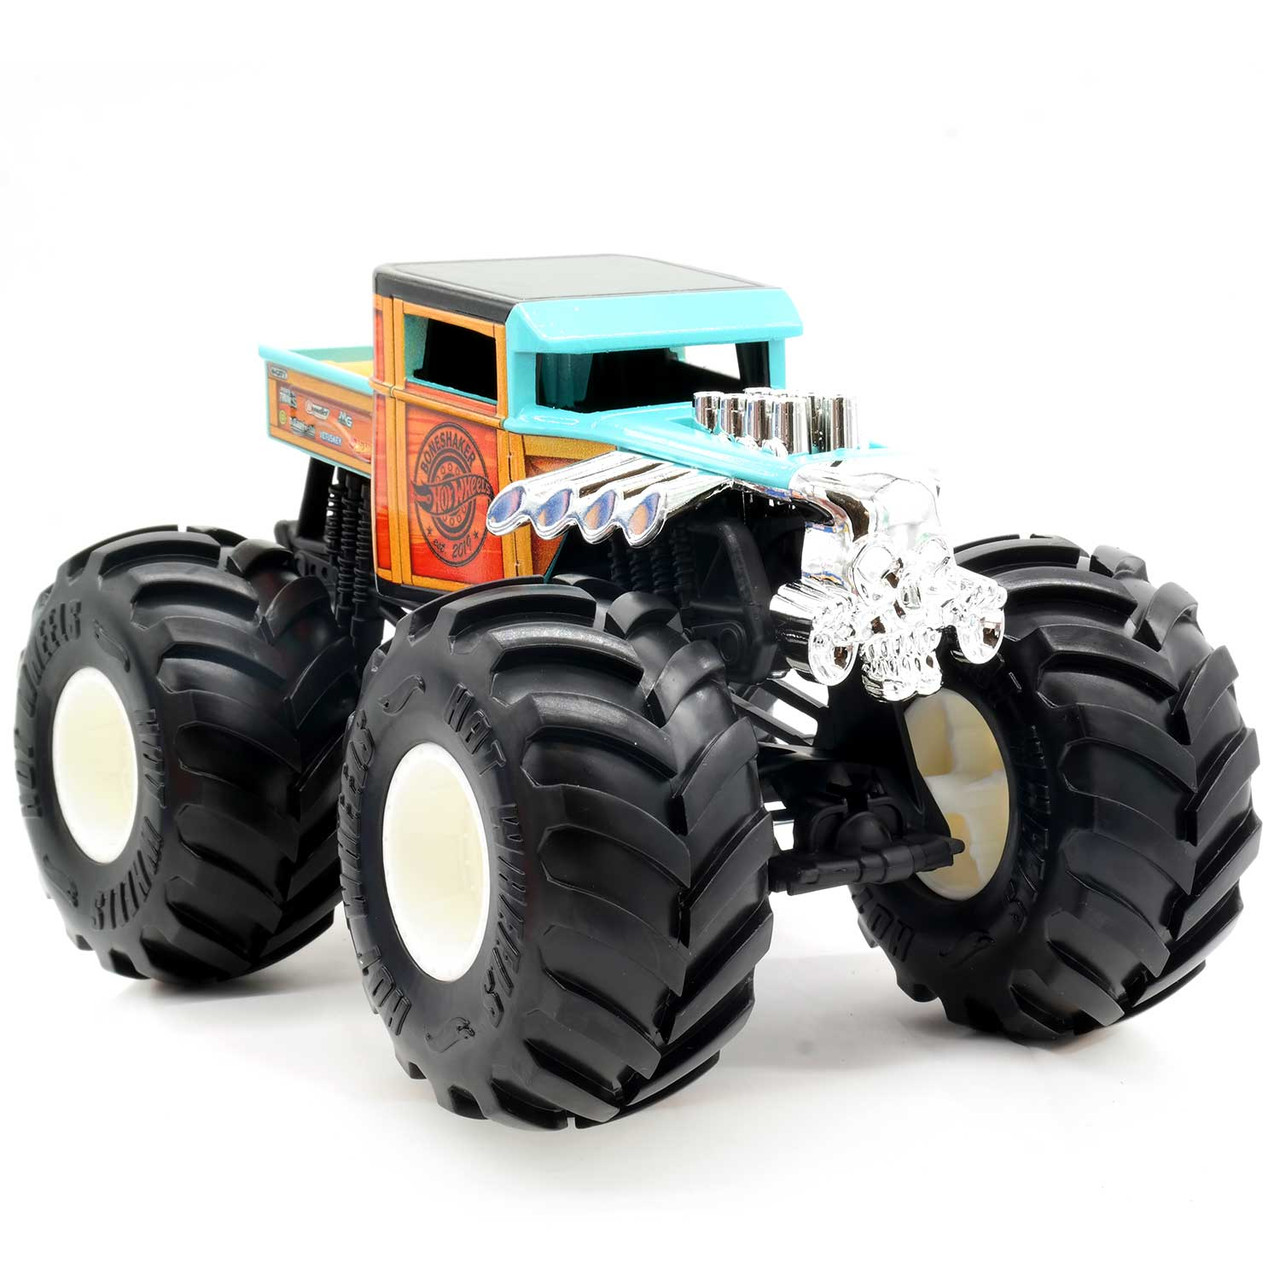 Hot Wheels Monster Trucks 1:24 Scale Bone Shaker Truck Play Vehicle 